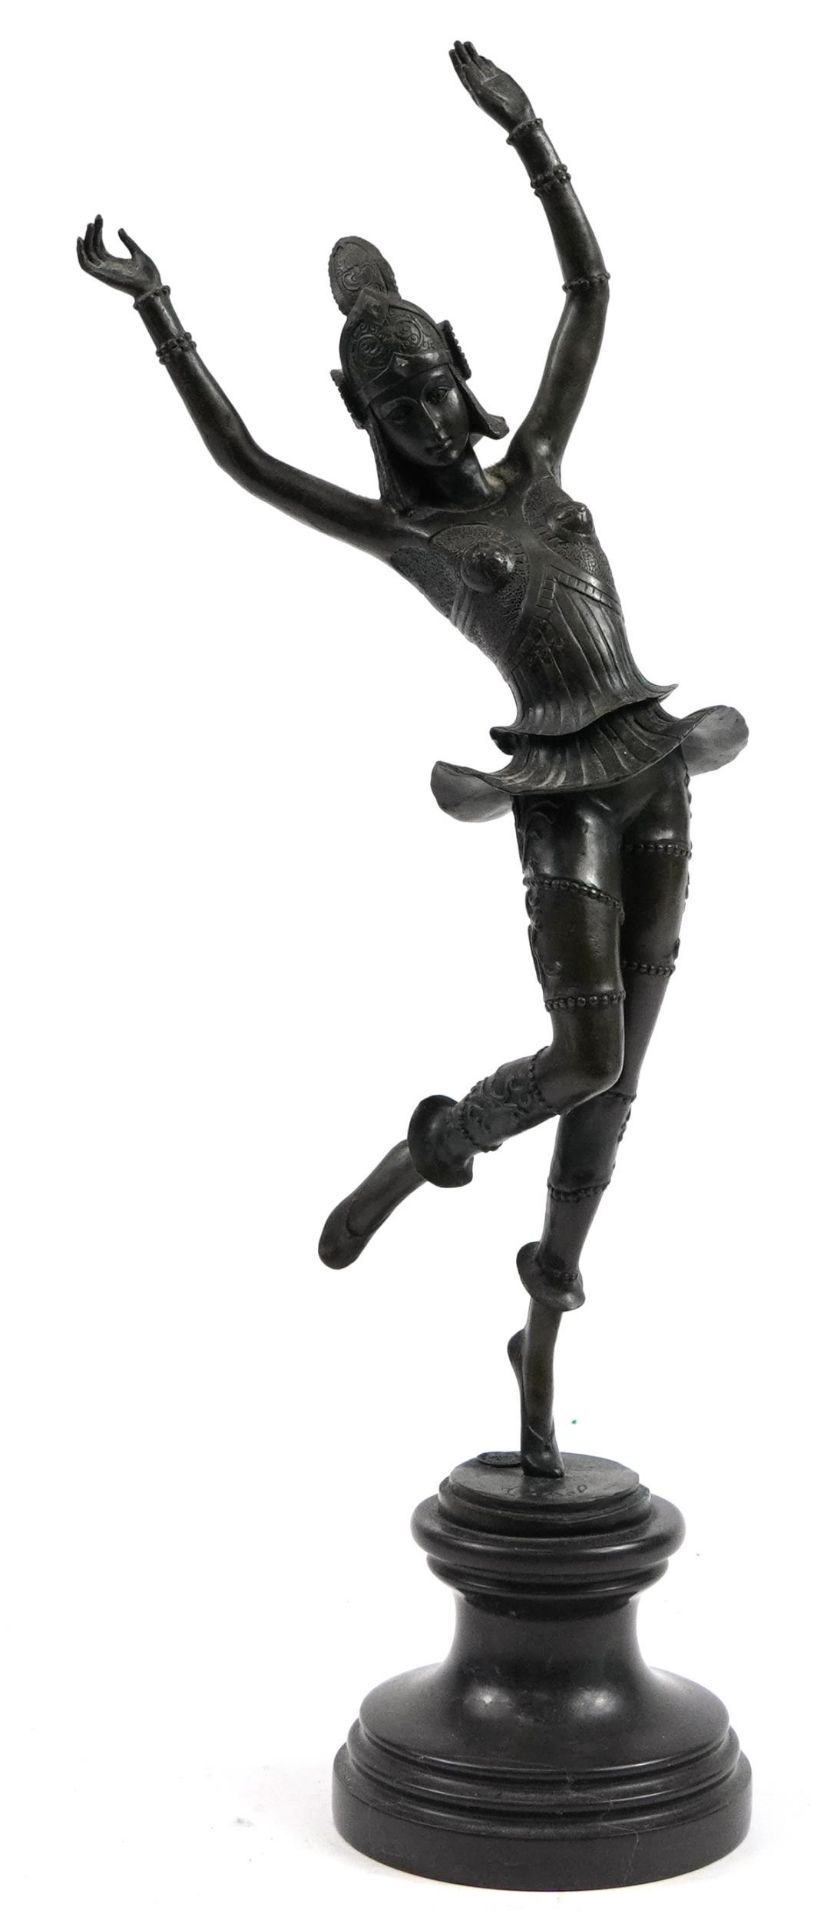 Patinated bronze figurine of an Art Deco dancer raised on a circular black marble base, 55.5cm high